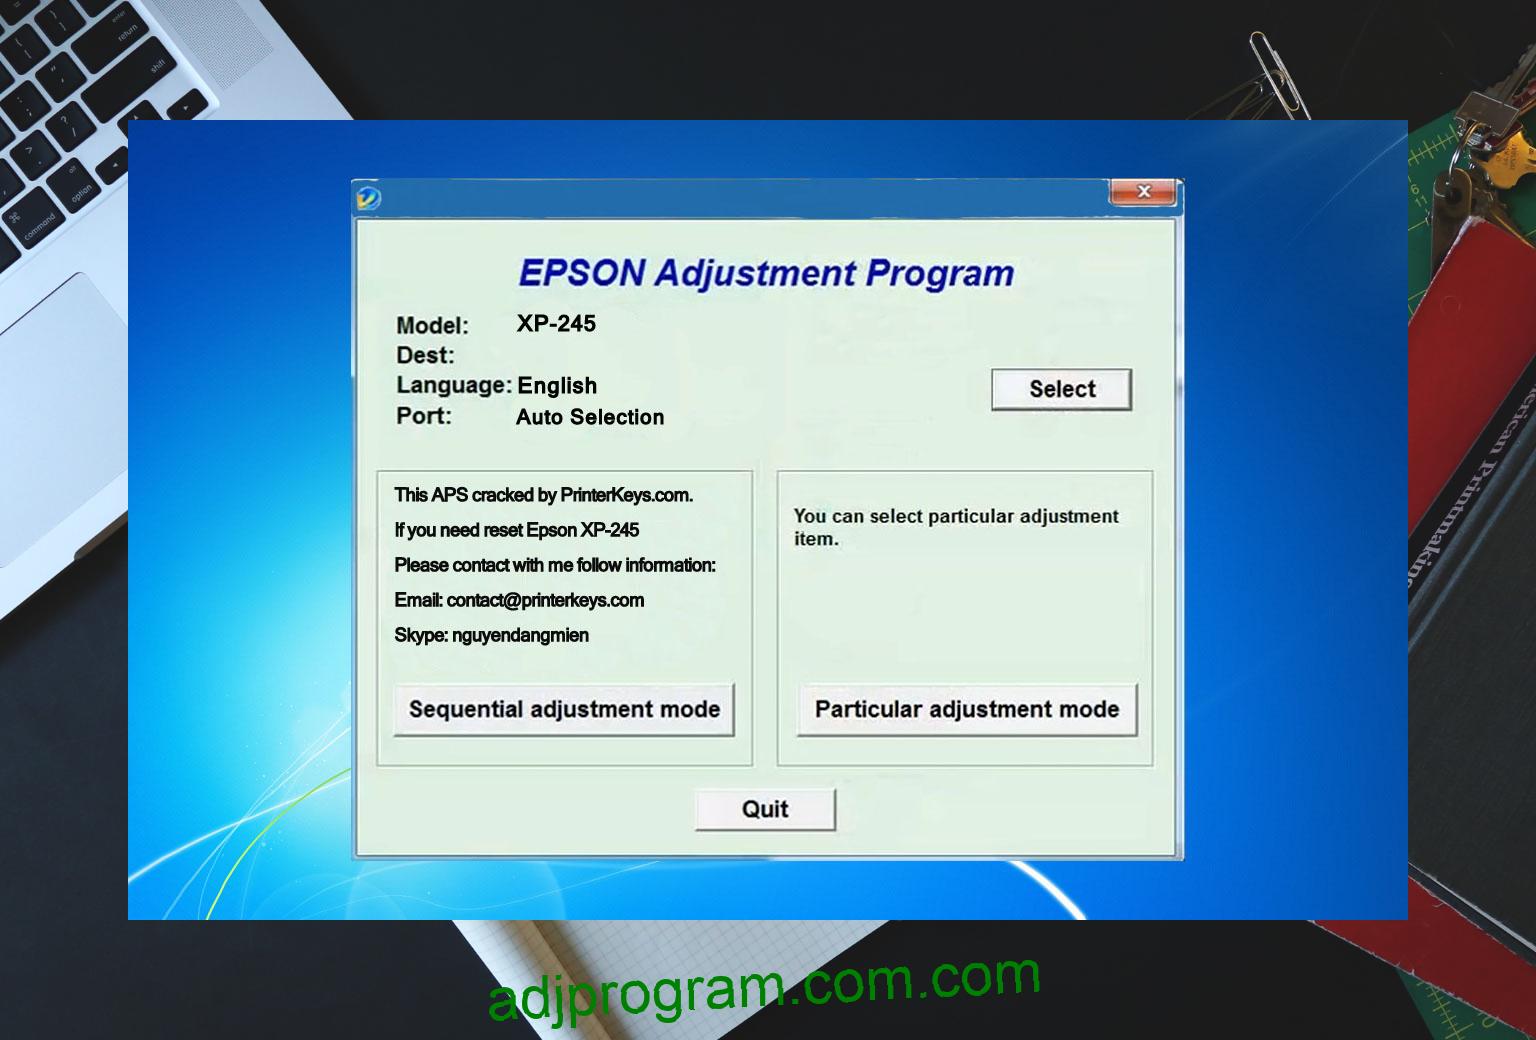 Epson XP-245 Adjustment Program